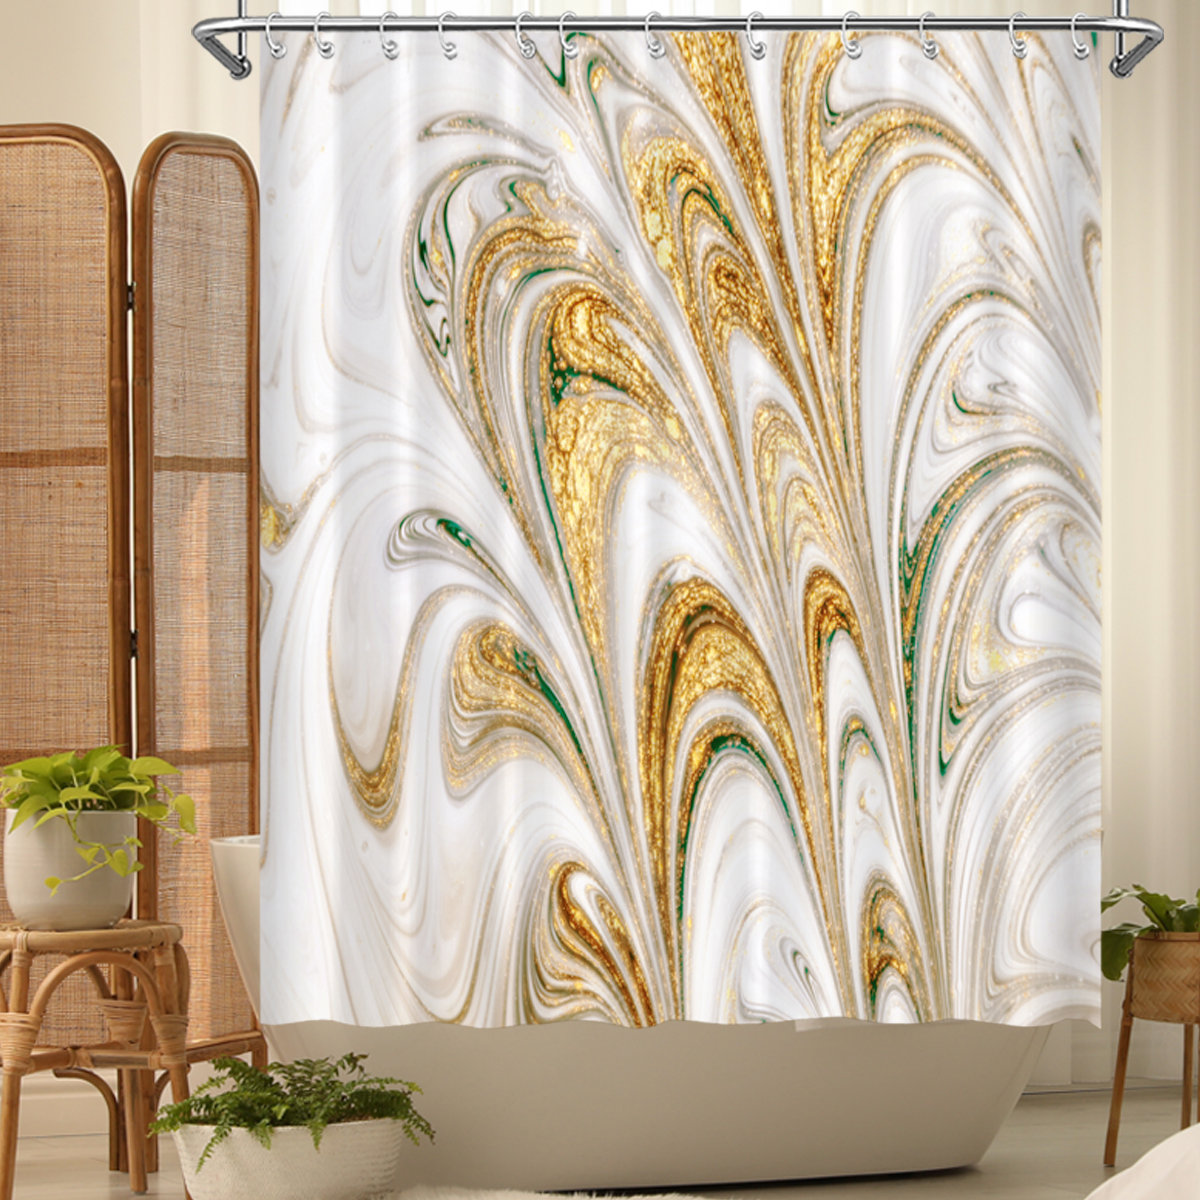 Archway Jardiniere Villa Shower Curtain Liner Polyester Waterproof Fabric Hooks 